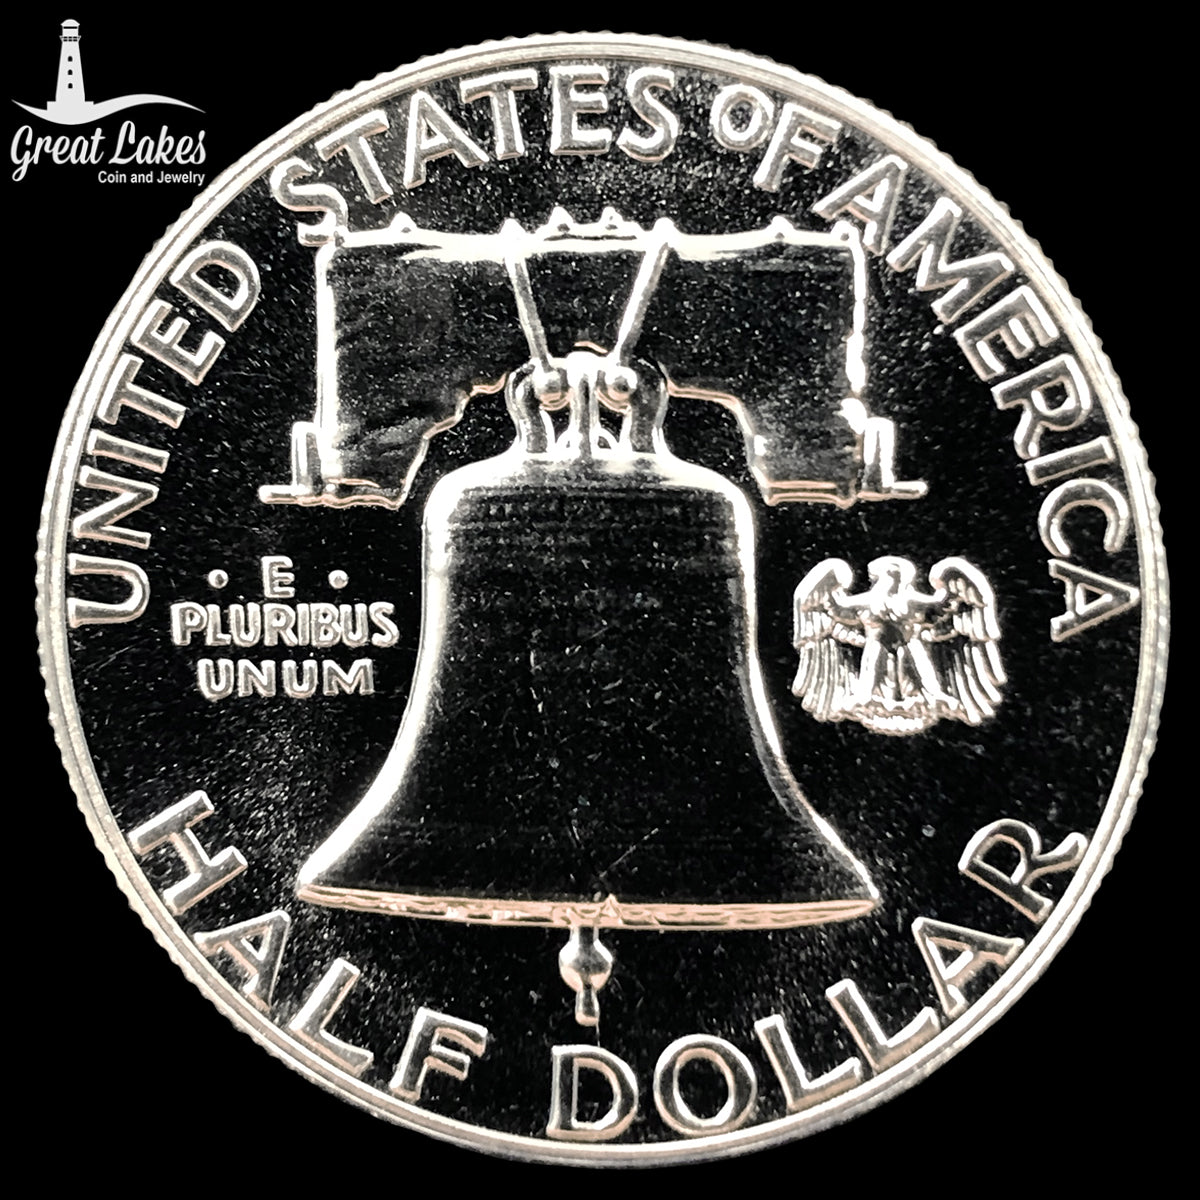 1962 Proof Franklin Half Dollar